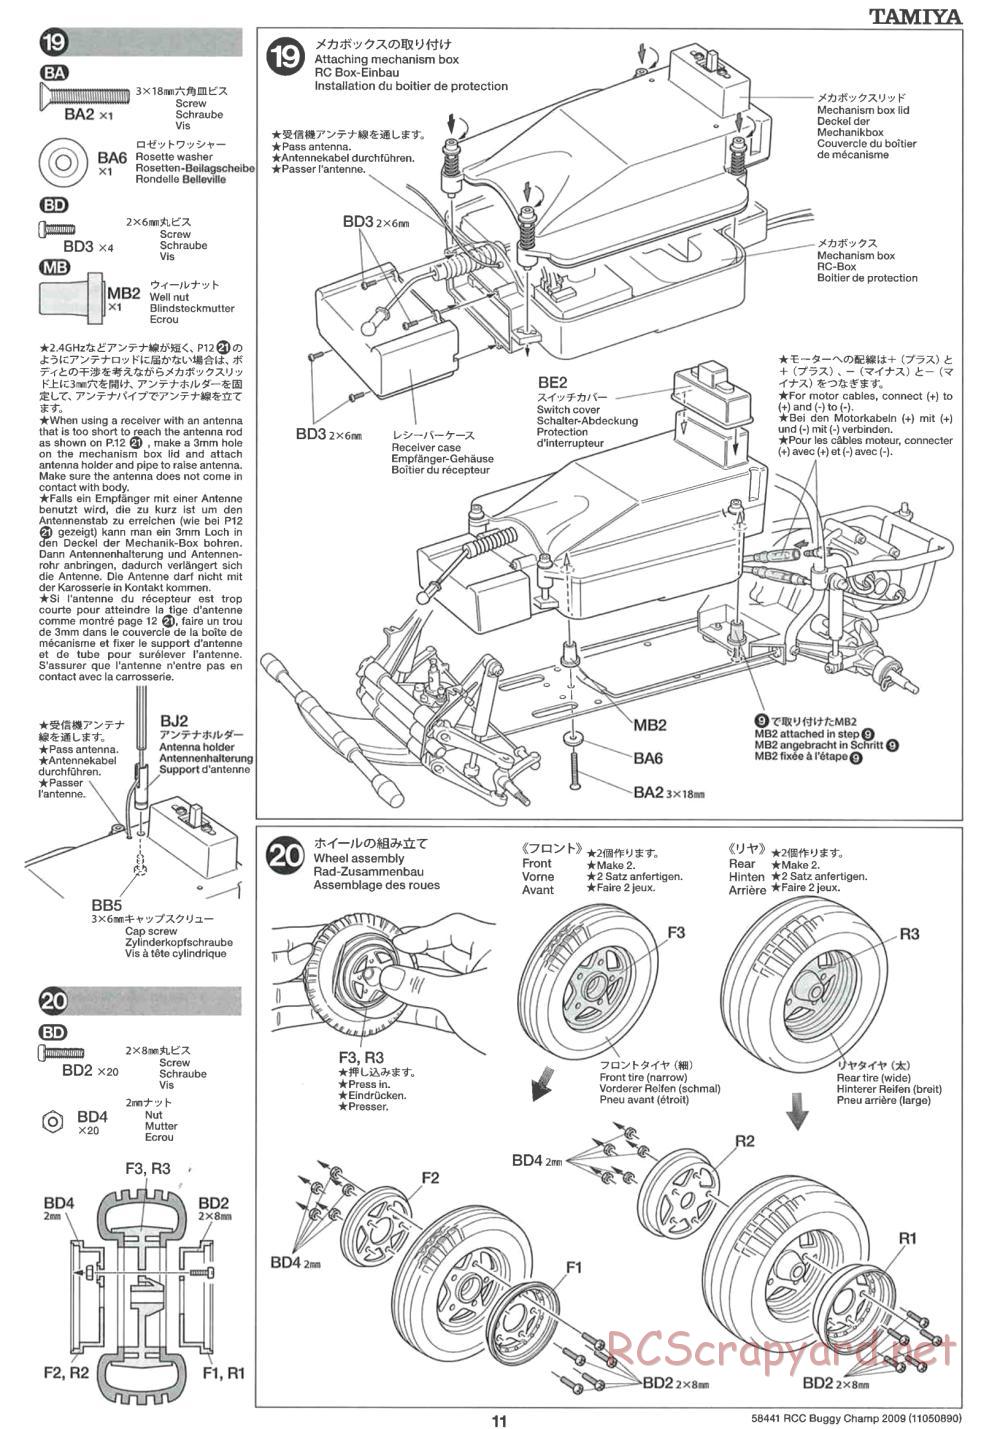 Tamiya - Buggy Champ Chassis - Manual - Page 11